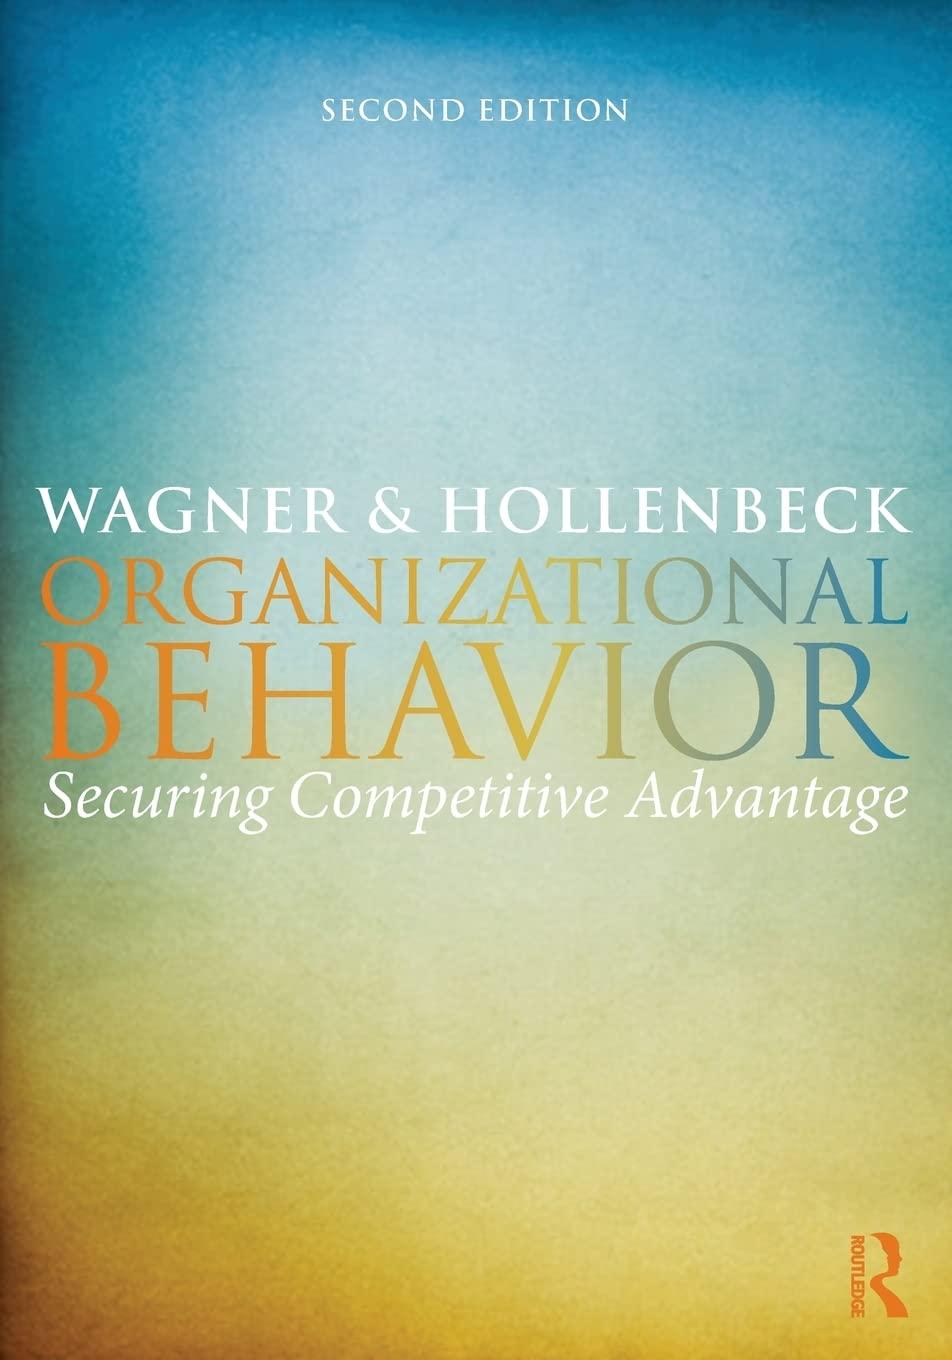 organizational behavior securing competitive advantage 2nd edition john a. wagner iii, john r. hollenbeck